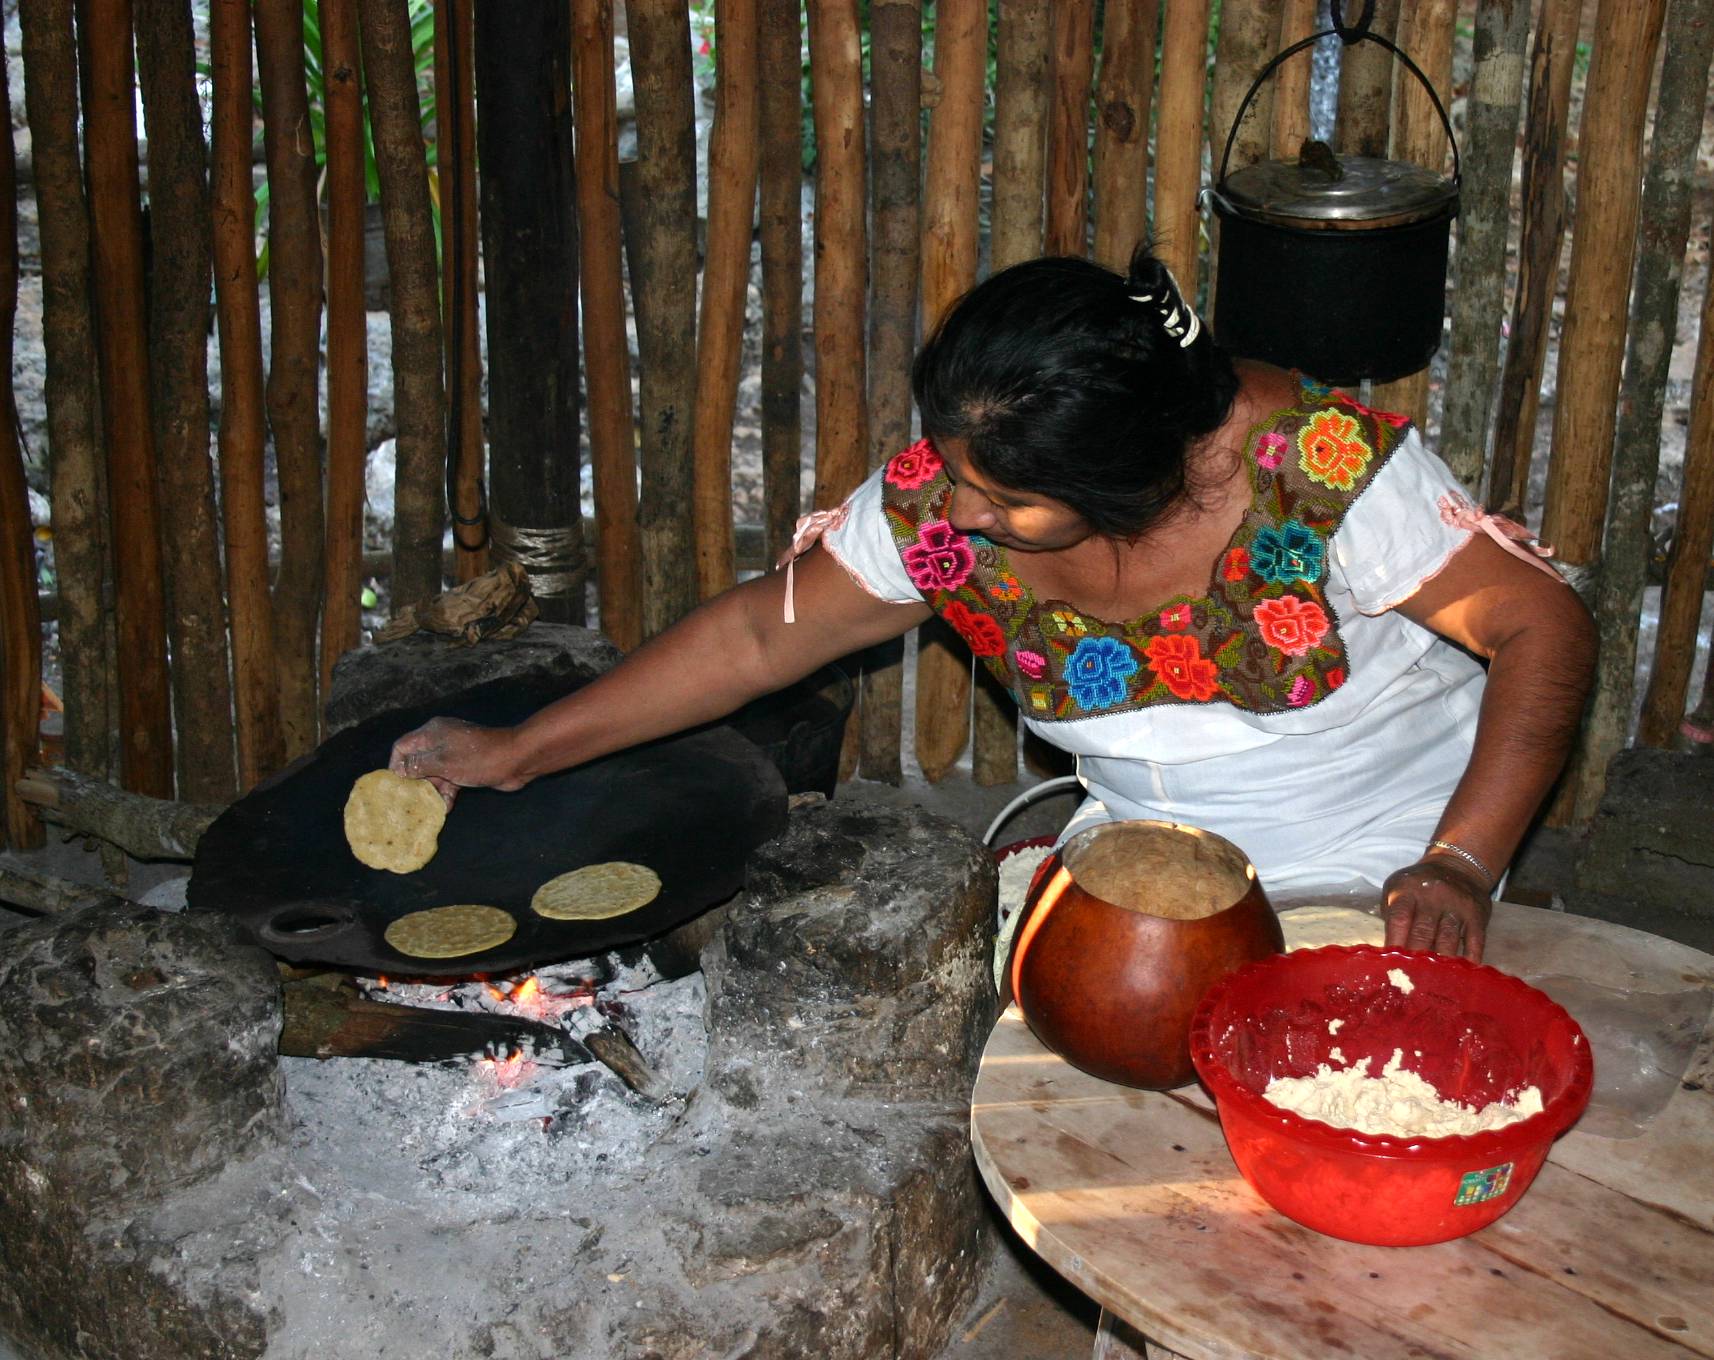 Mexican woman preparing tortillas